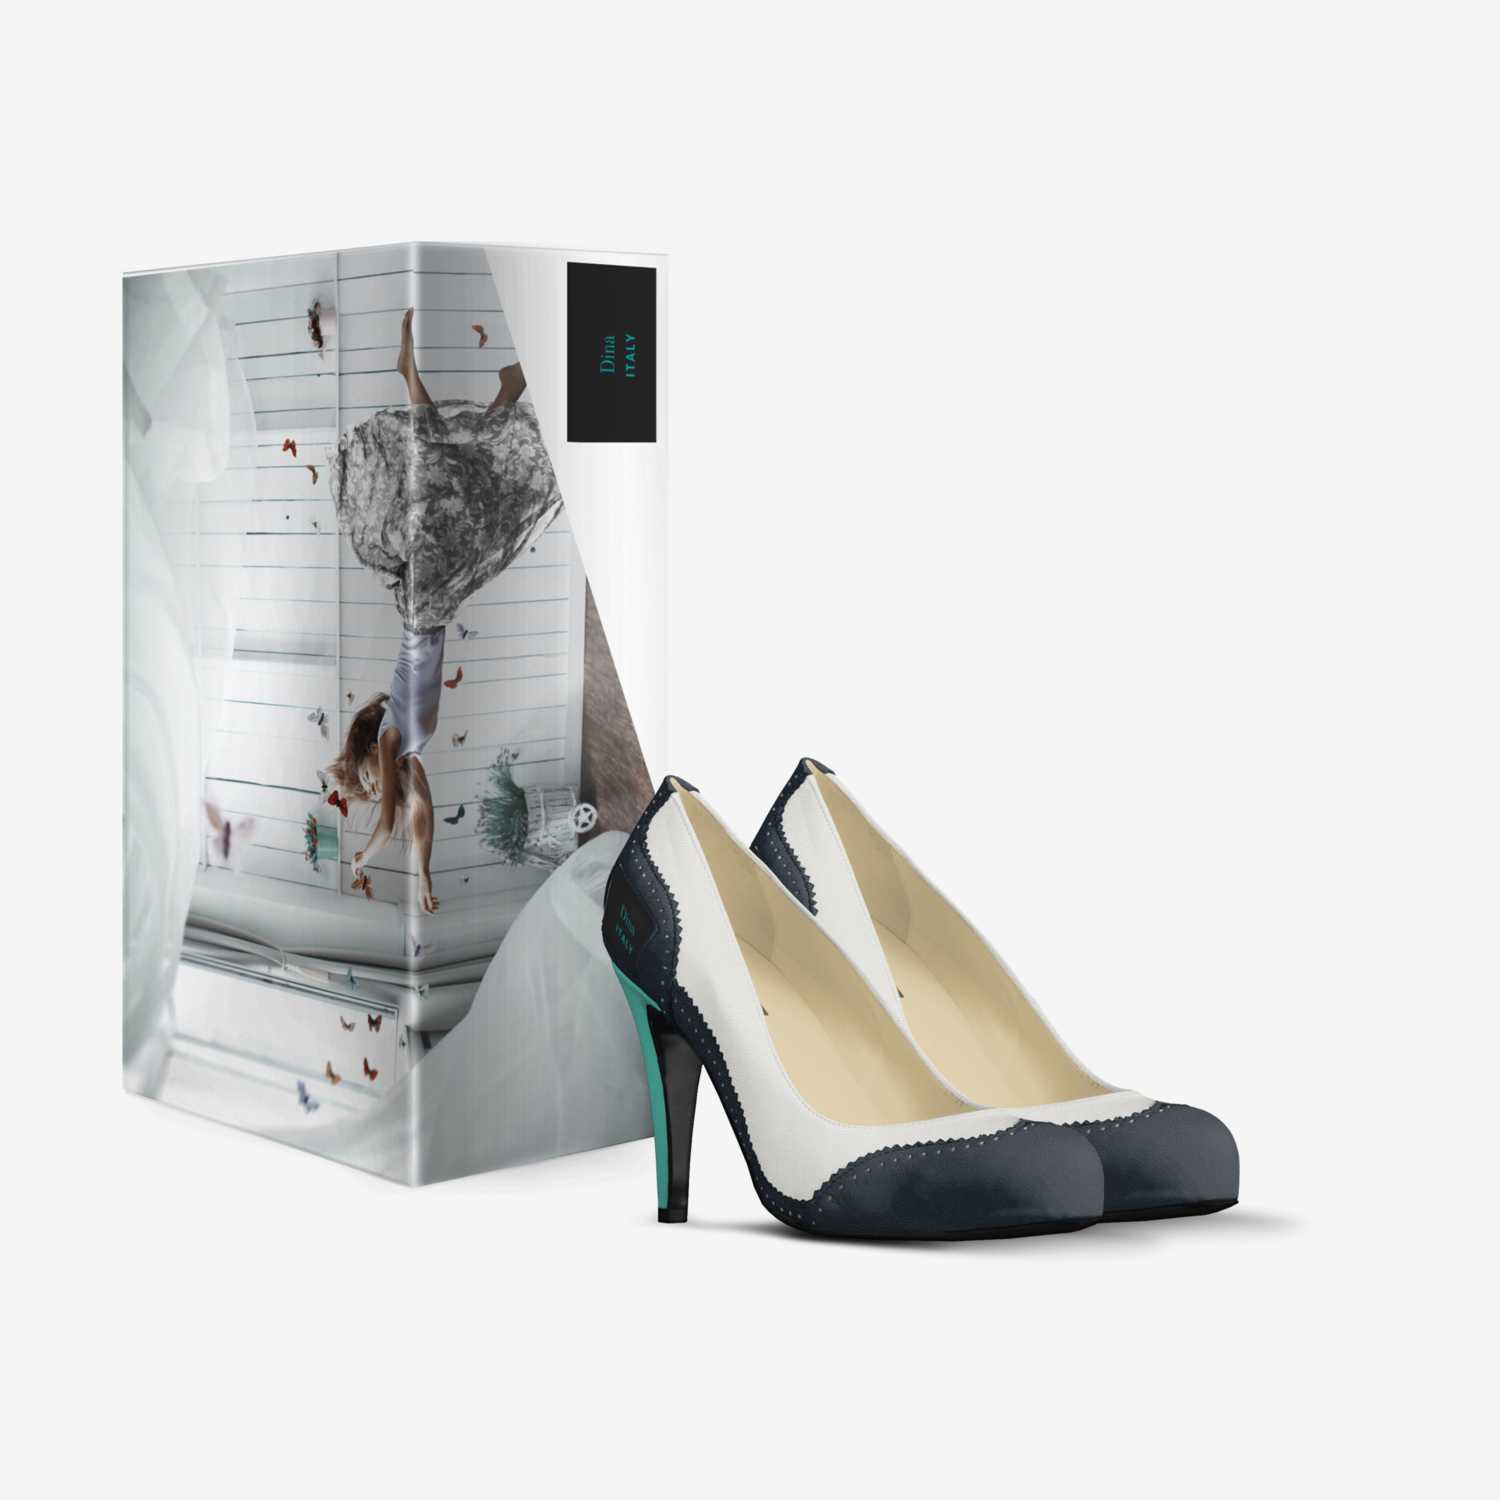 Dina custom made in Italy shoes by Dina Vukmanovic | Box view